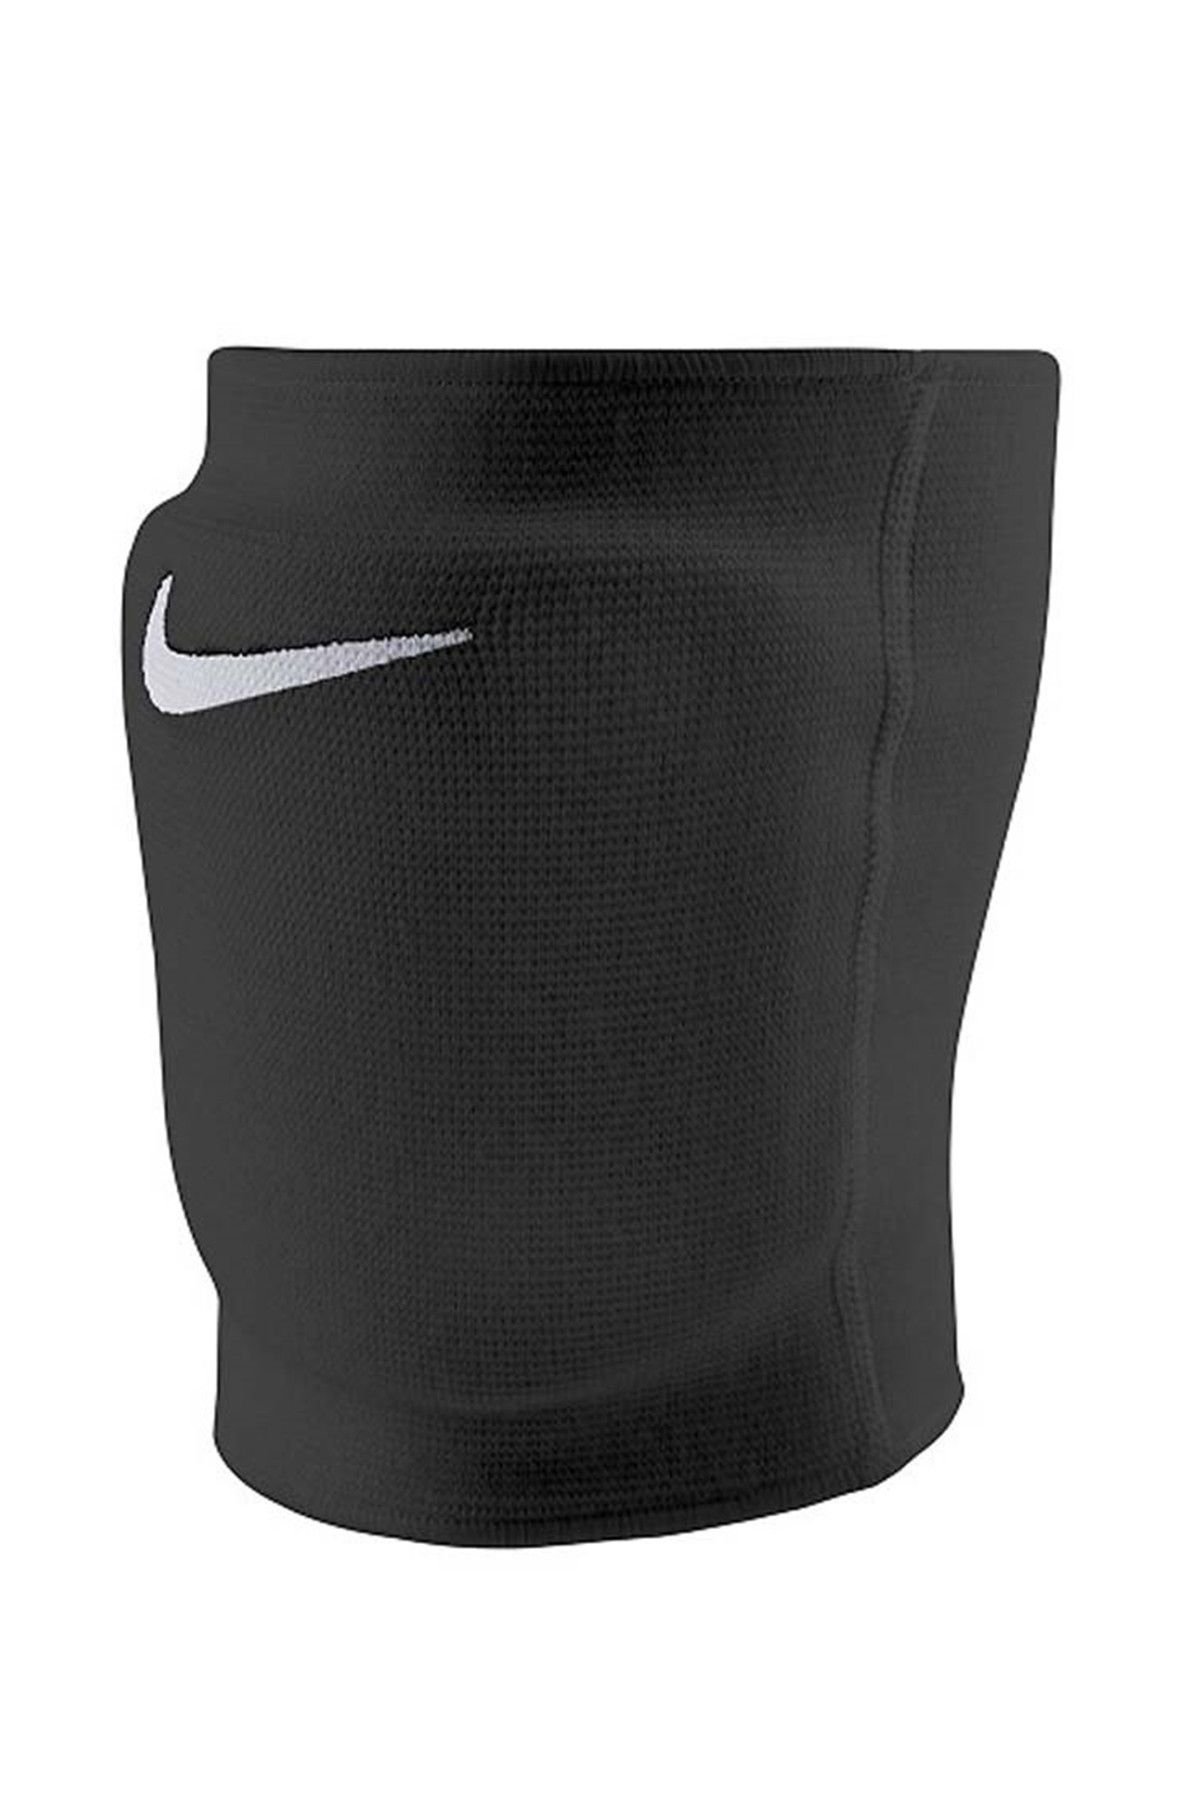 Nike Unisex Voleybol Malzeme & Aksesuar -  Essential Voleybol Dizliği Siyah - NVP06-001